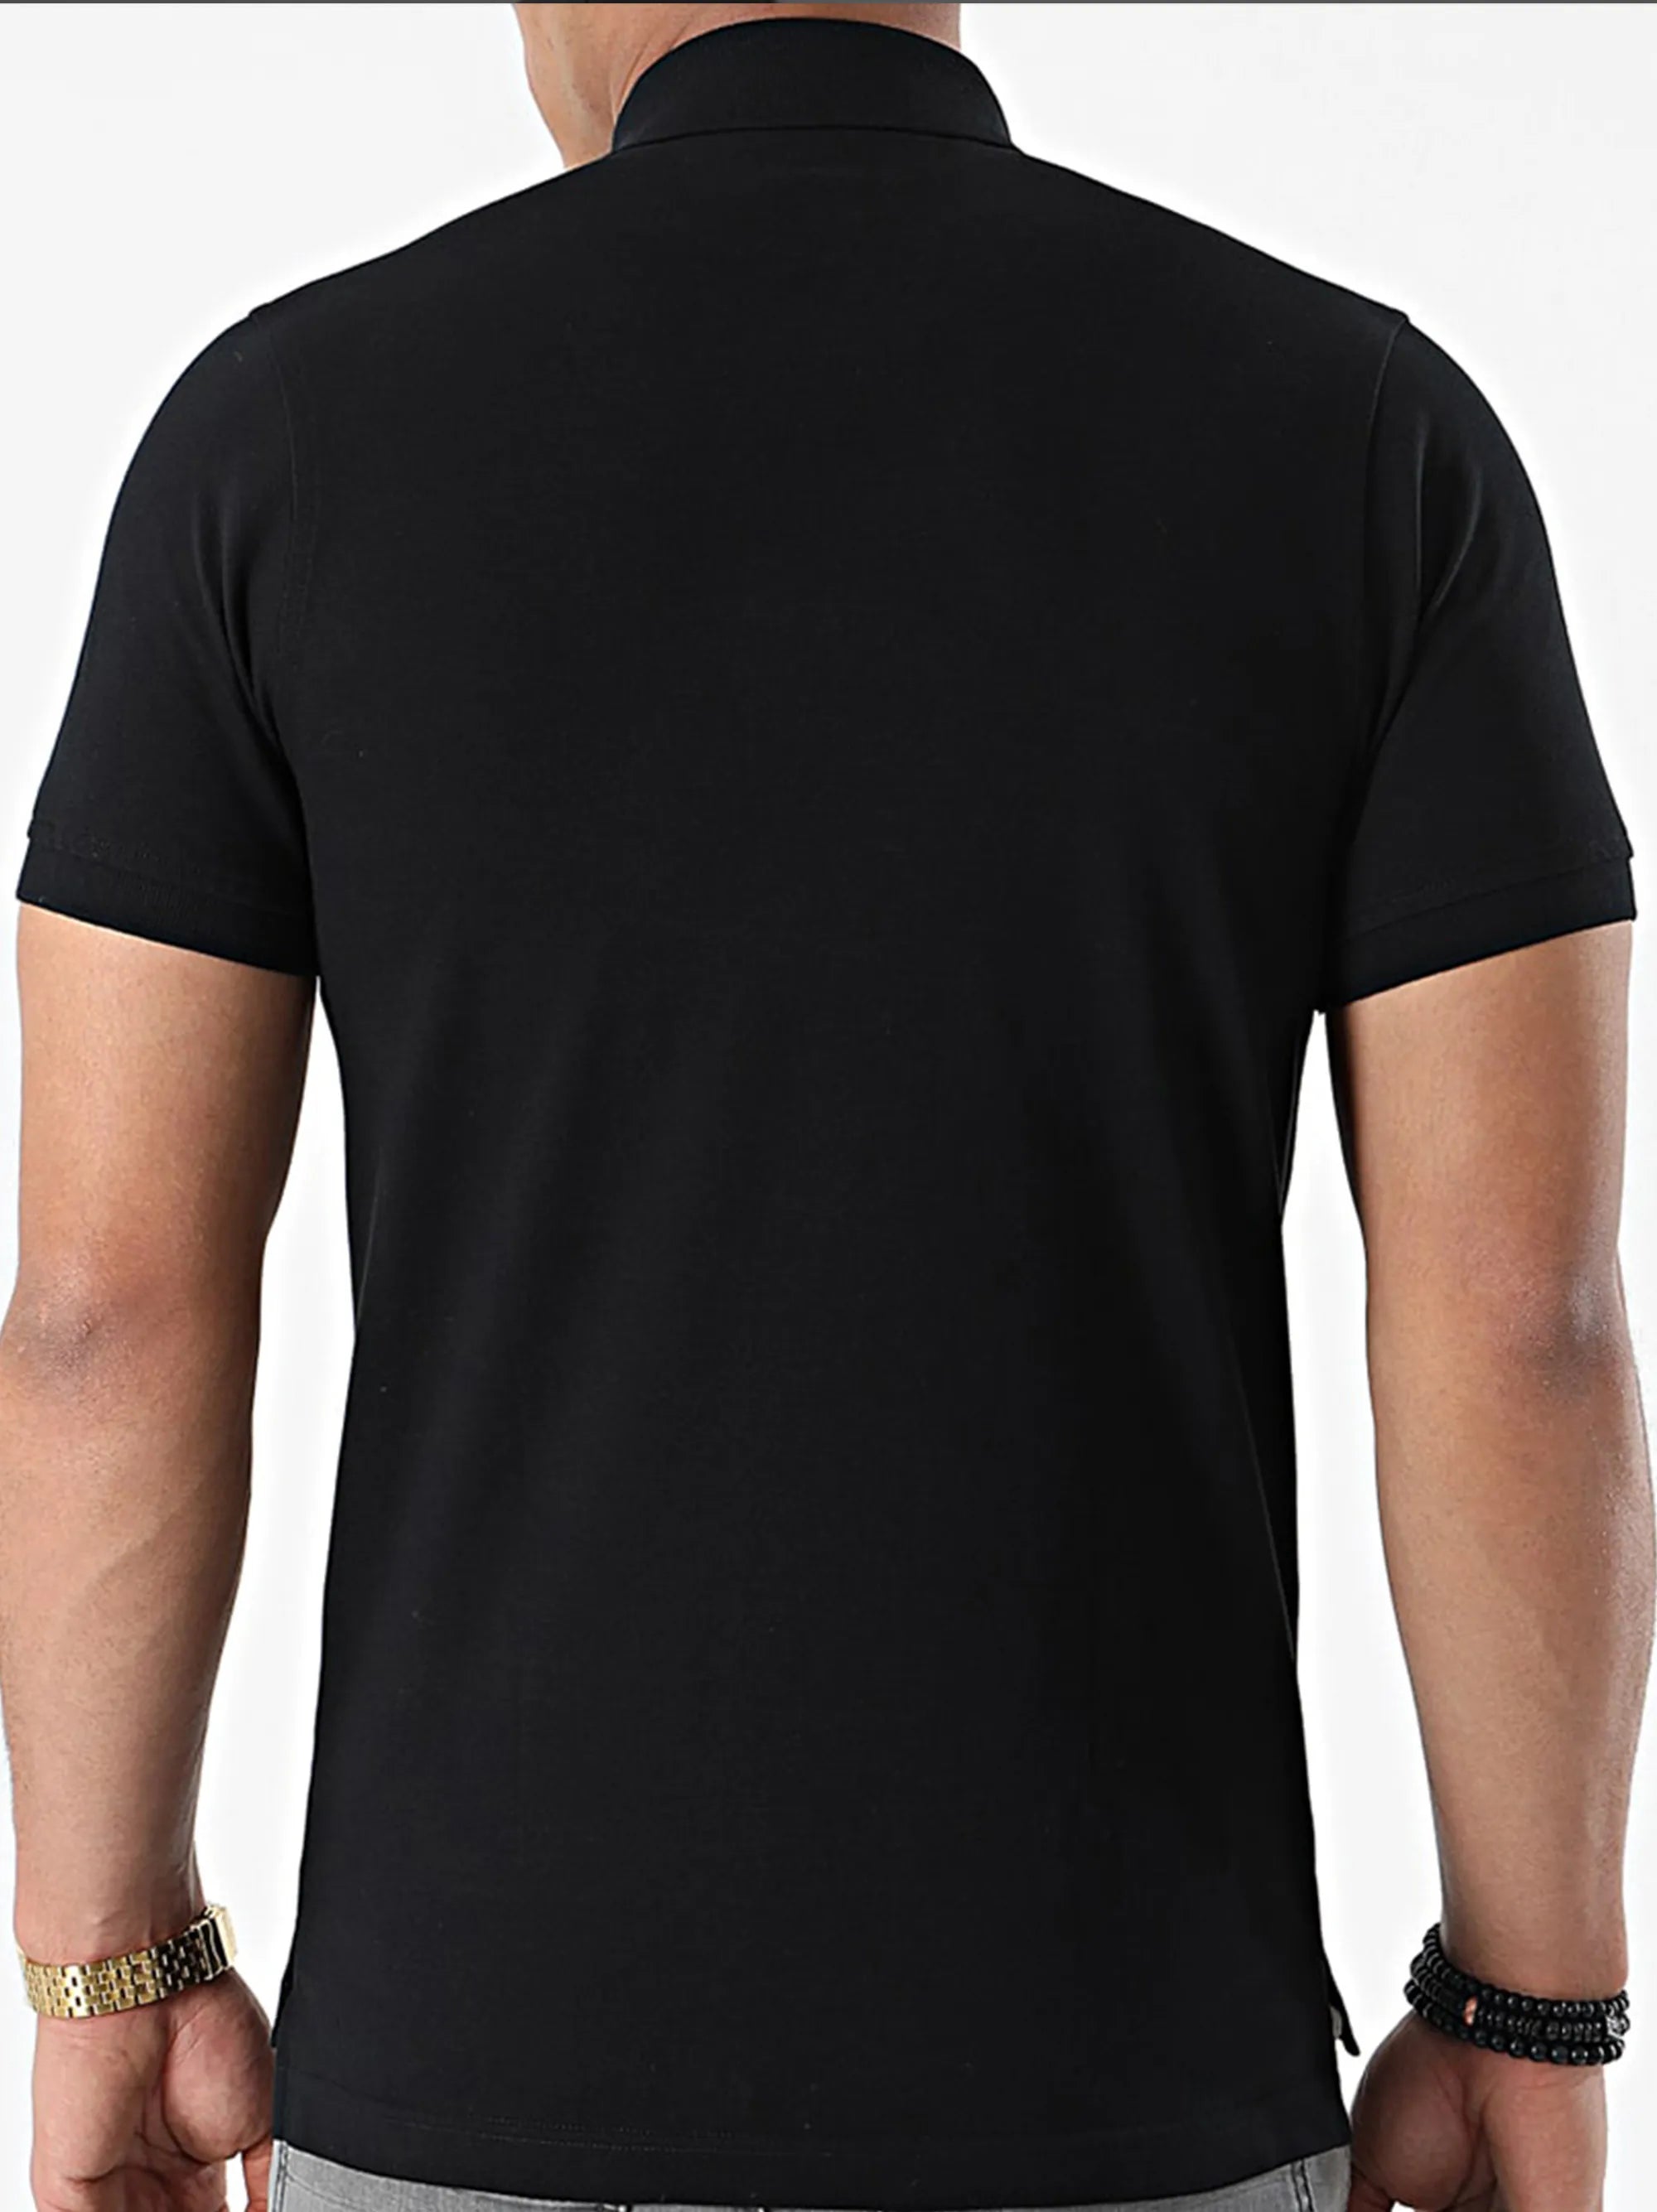 Men’s Black Polo Shirt In 3 Button Collar with embroidery logo